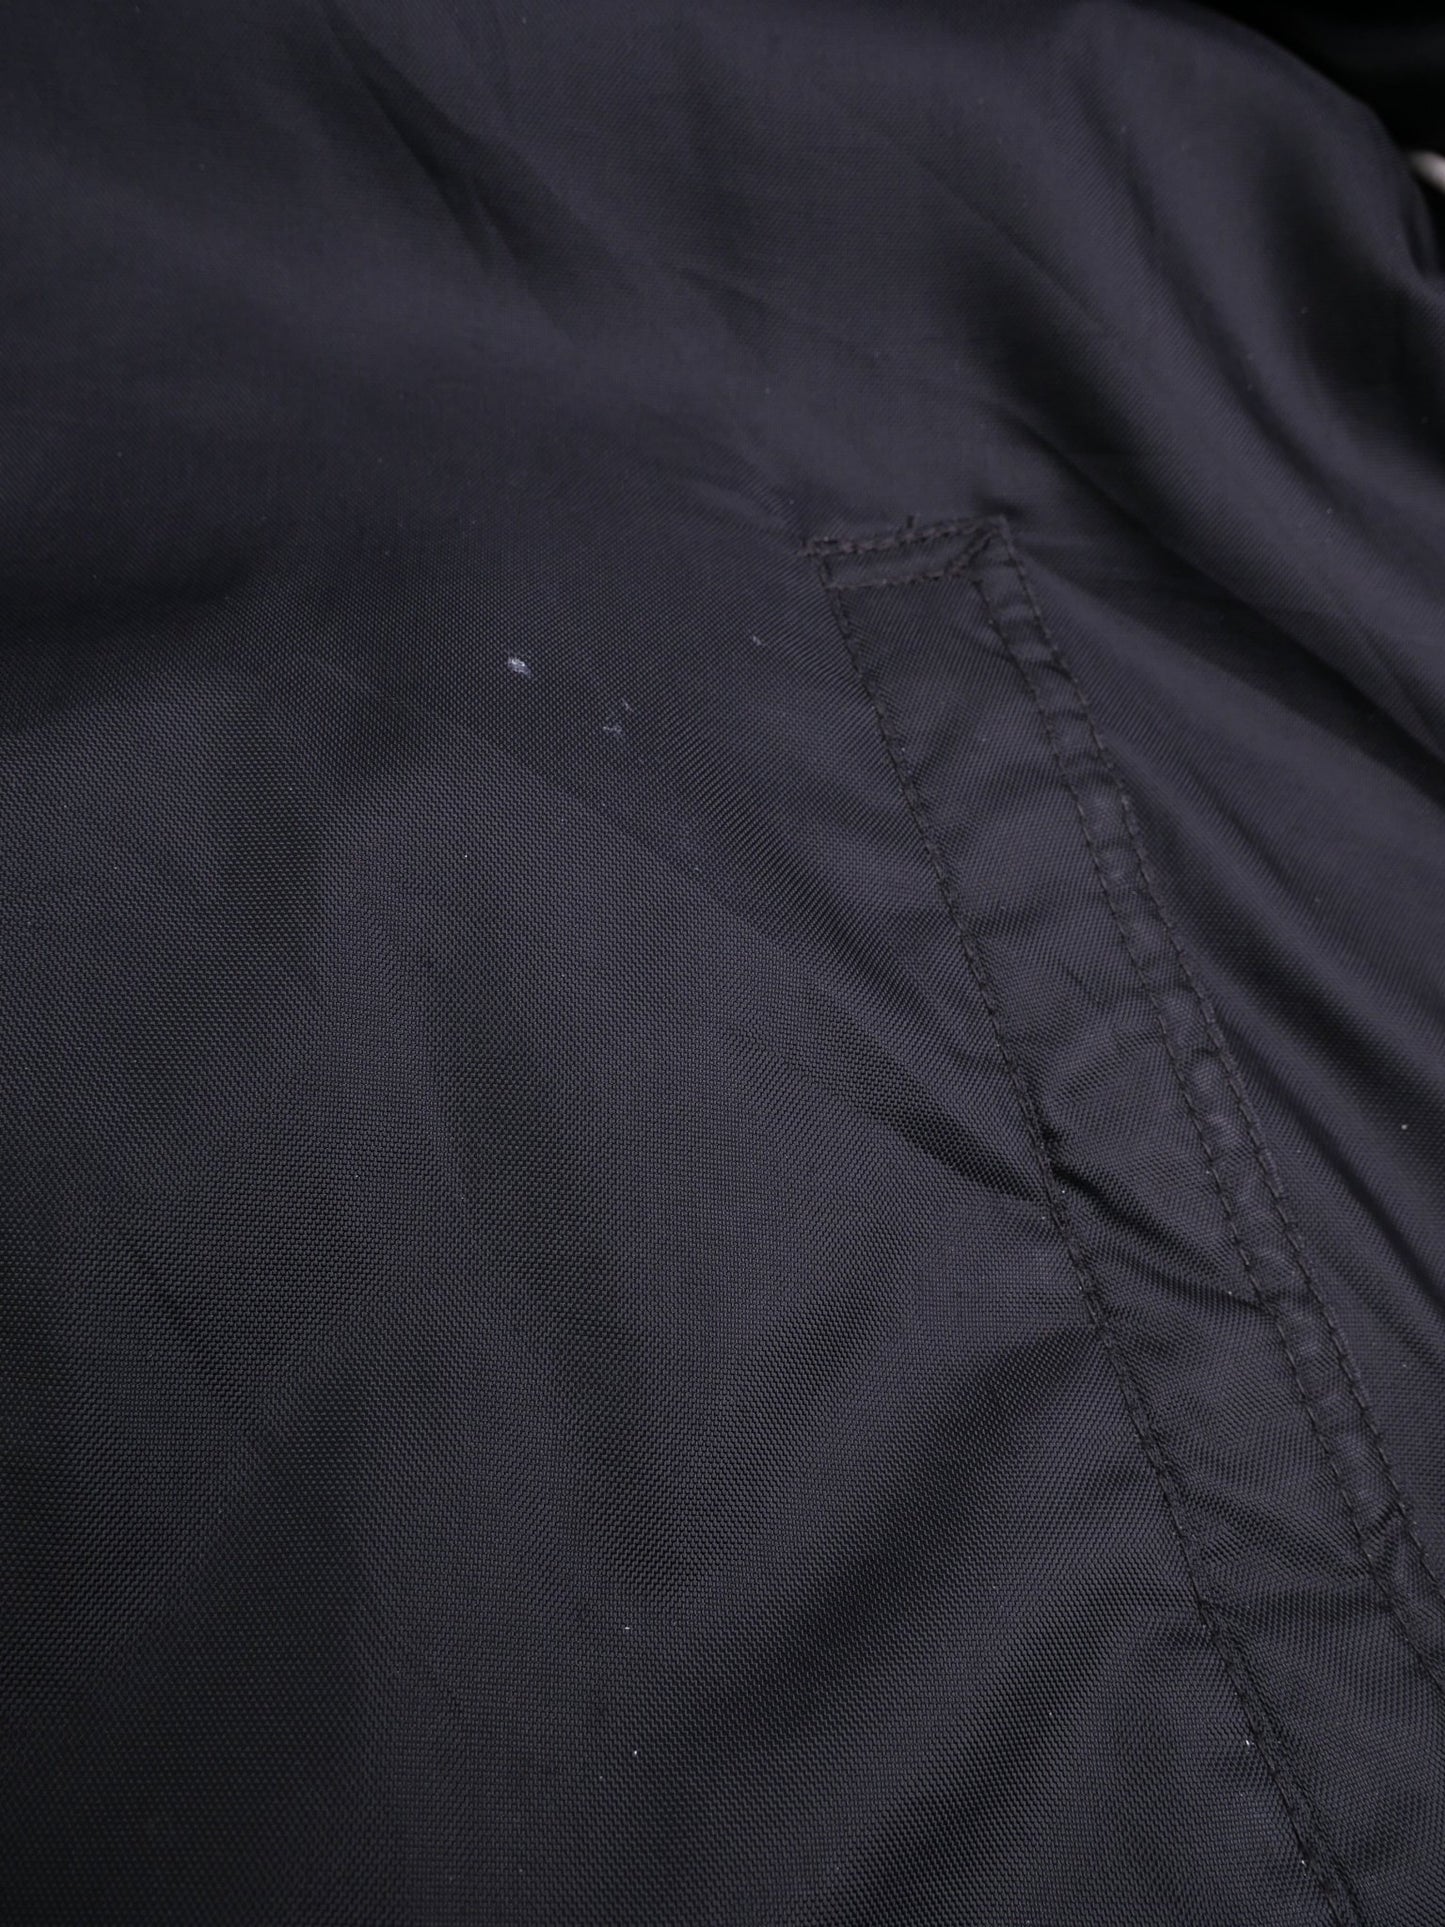 fila embroidered Logo black thick Jacket - Peeces